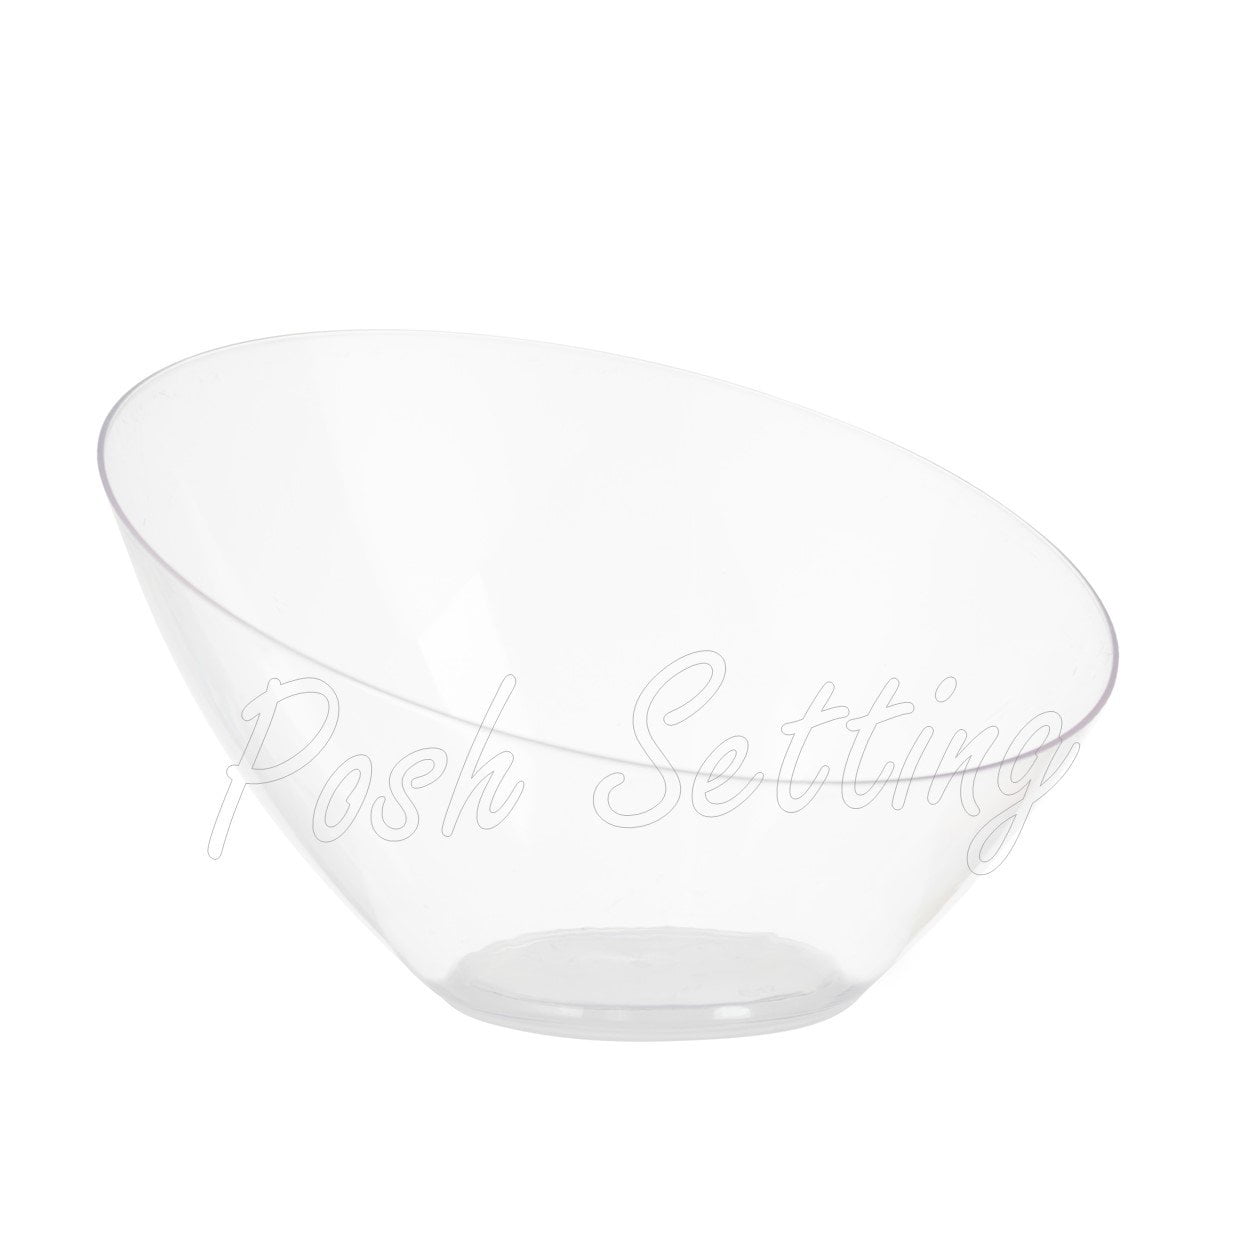 Clear Plastic Serving Bowls For Parties Disposable Hard Plastic Salad Bowls 5 PK 